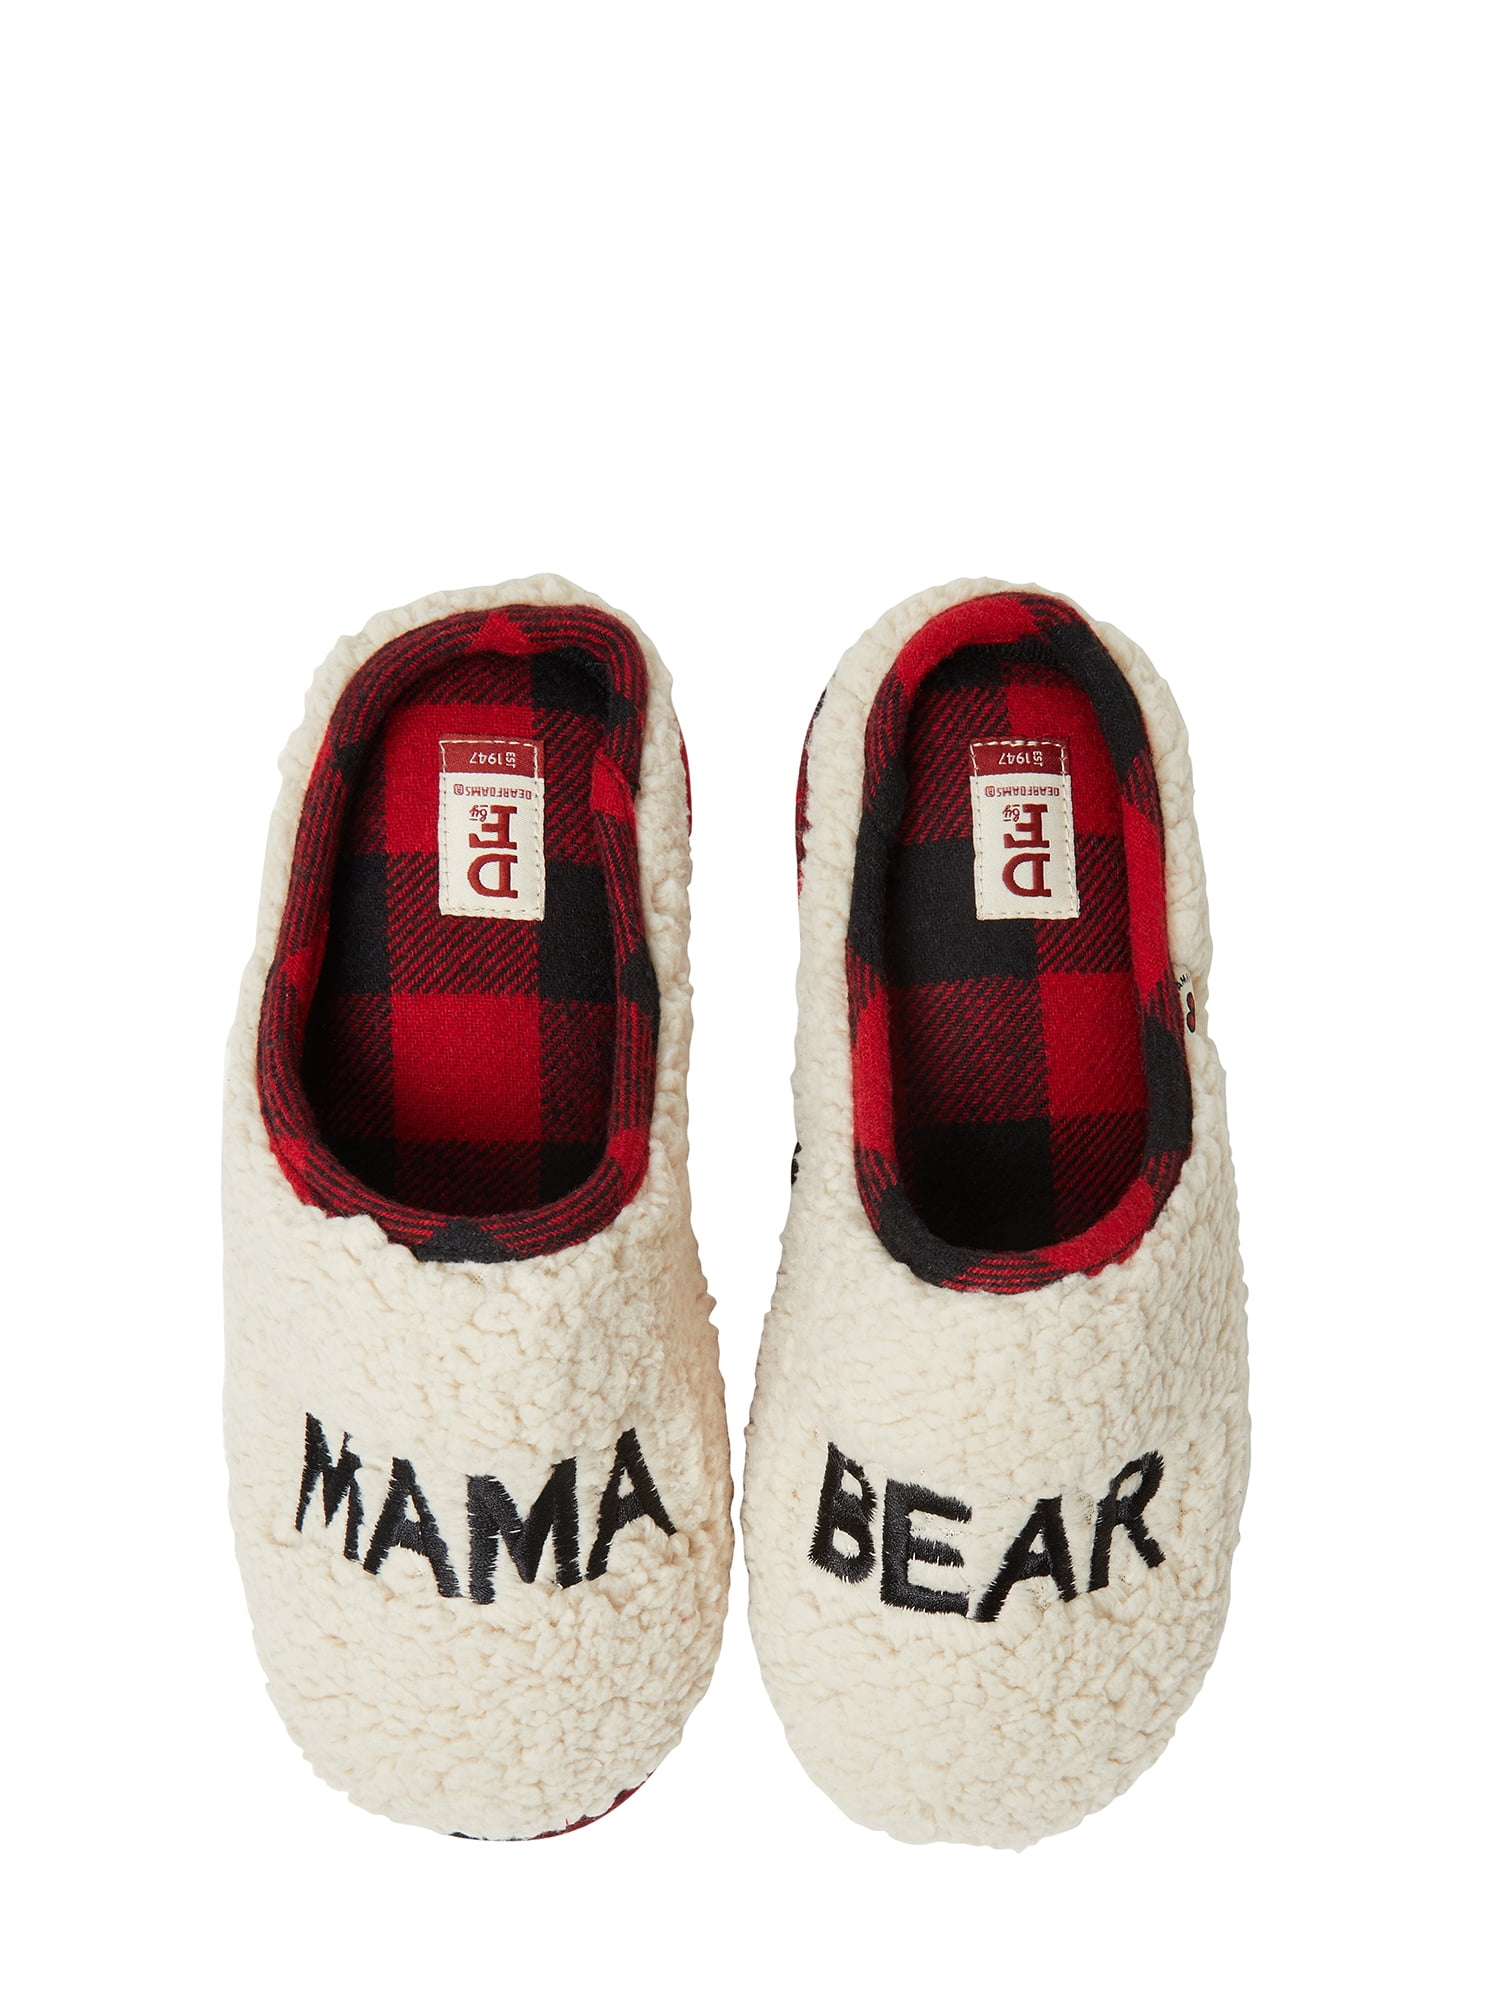 walmart slippers in store